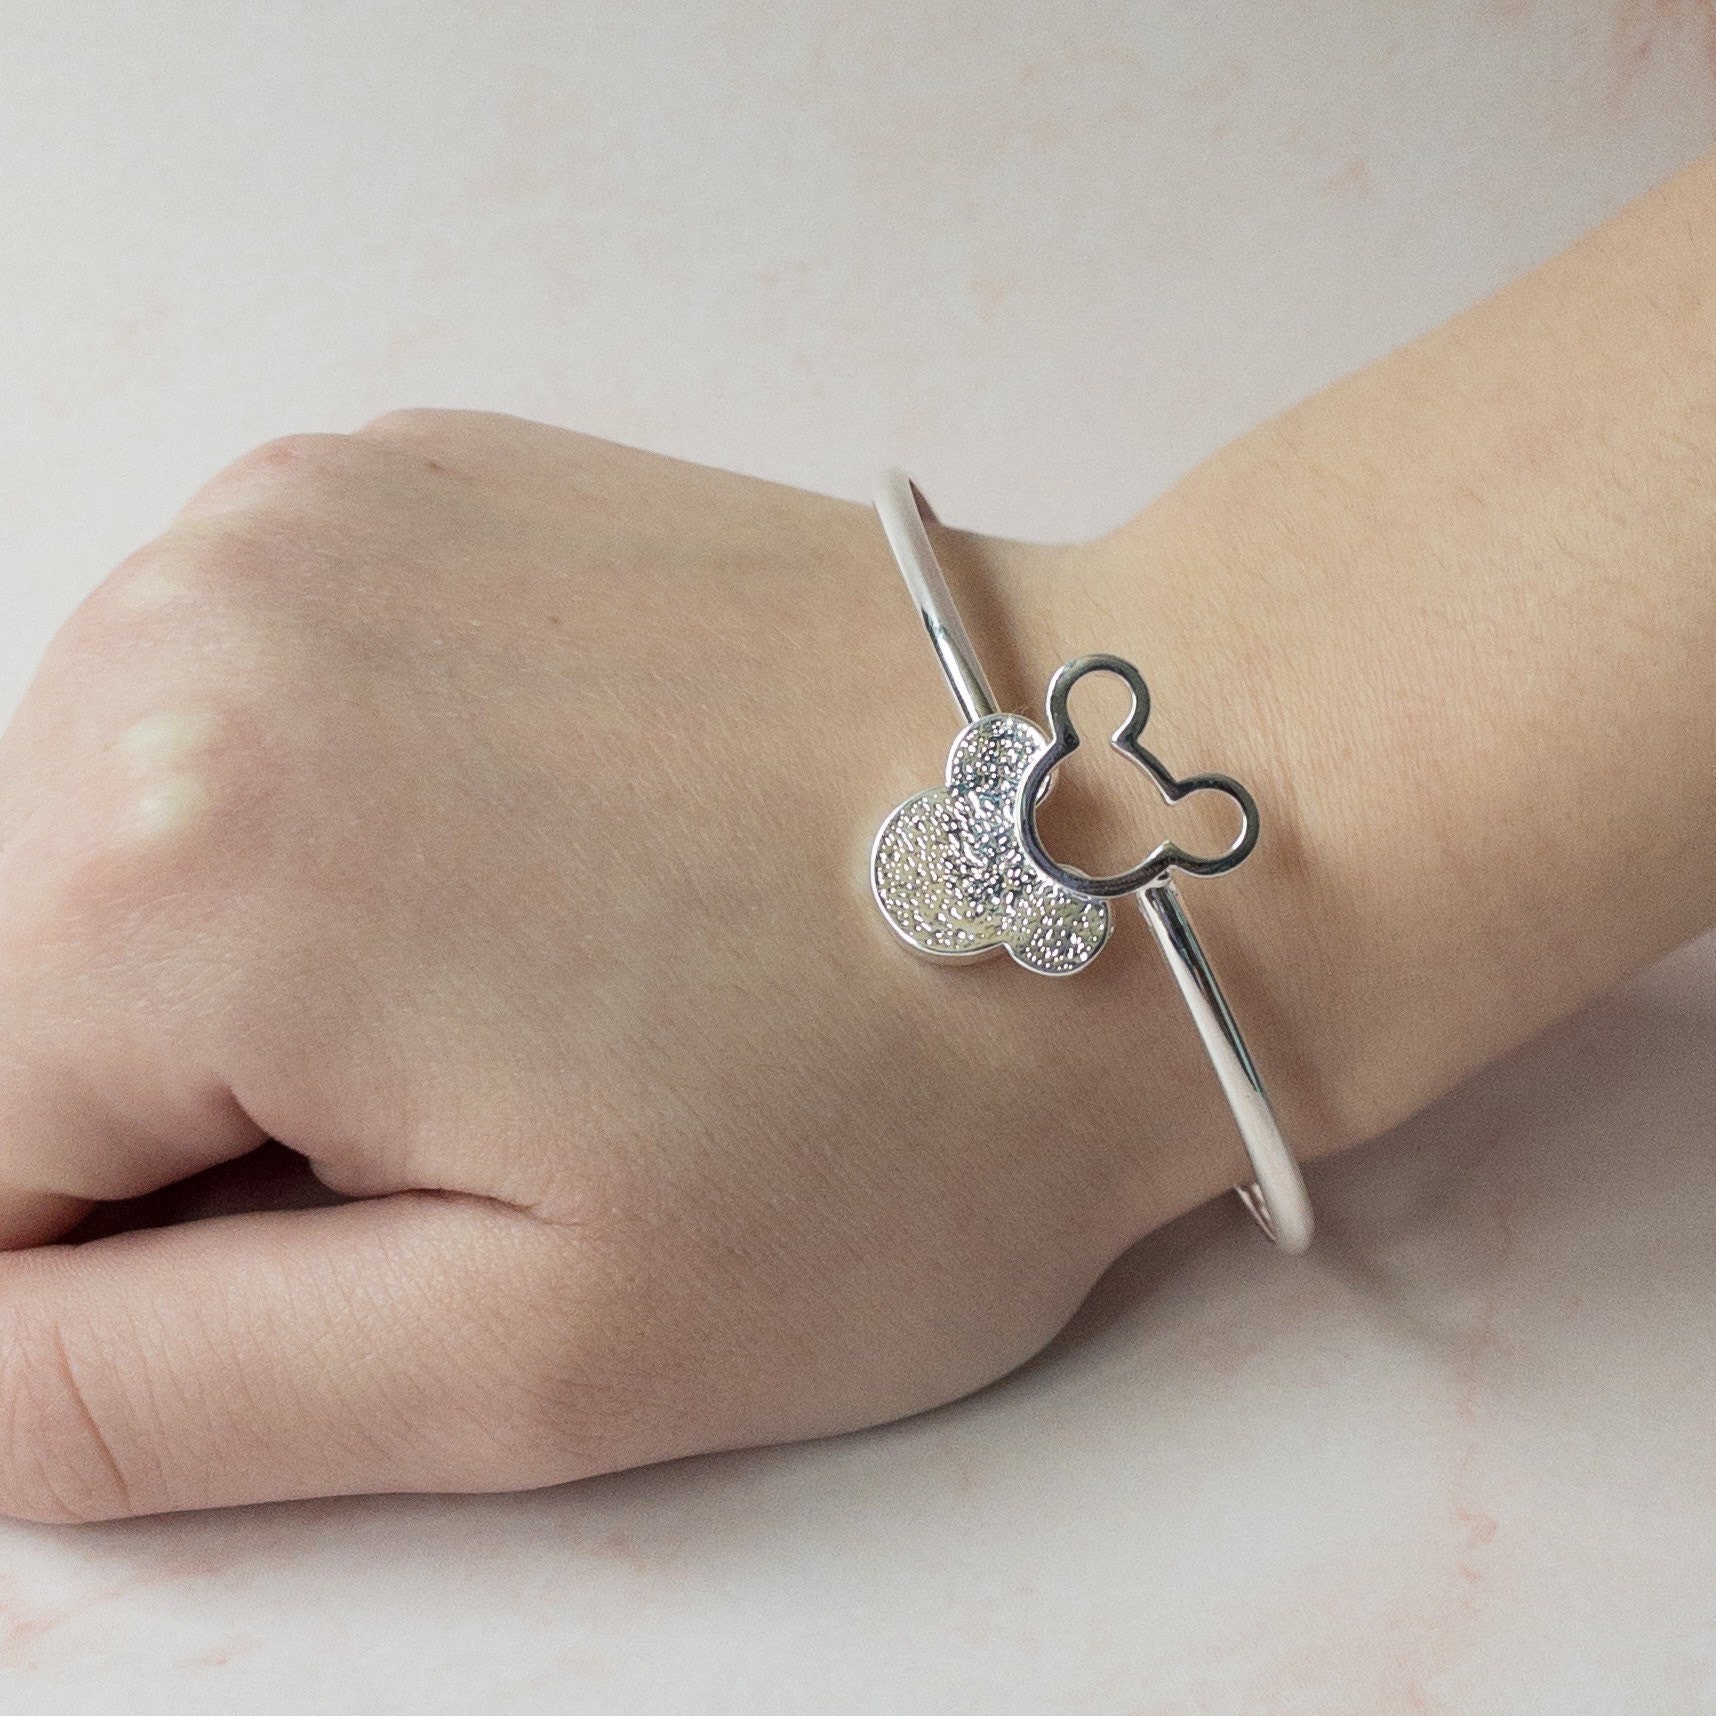 Win This Fabulous Gold Mickey Mouse Bracelet – FREE! | Mouze Kateerz